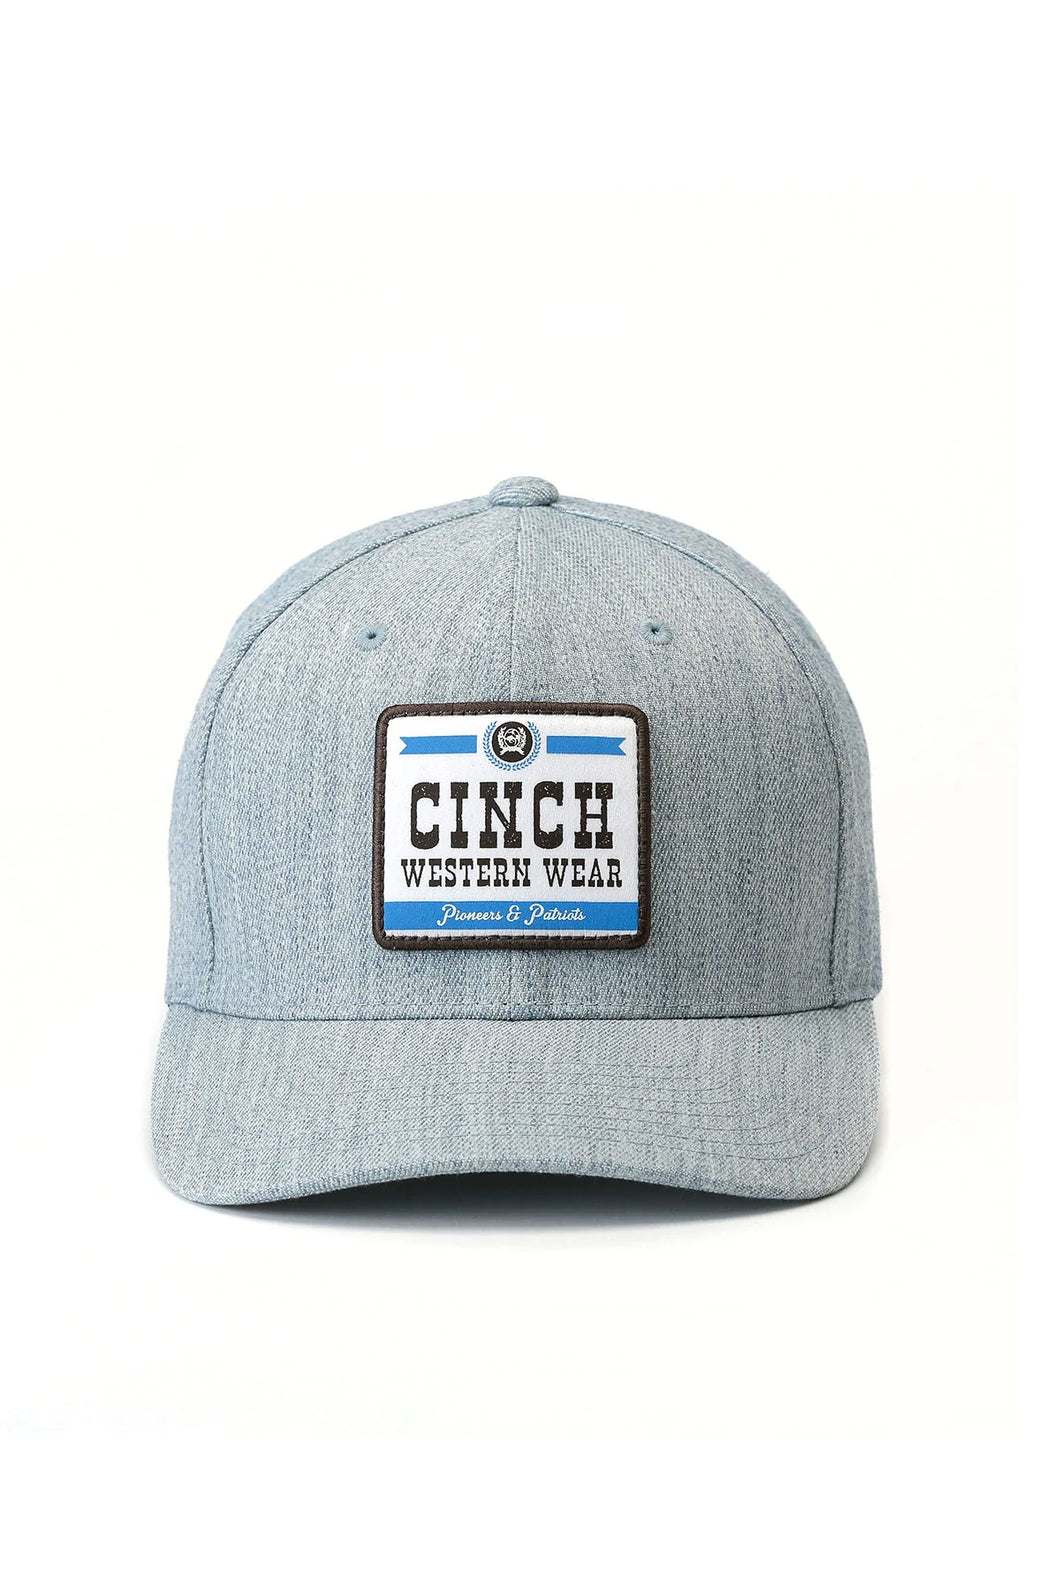 Cinch | Cap | Pioneers